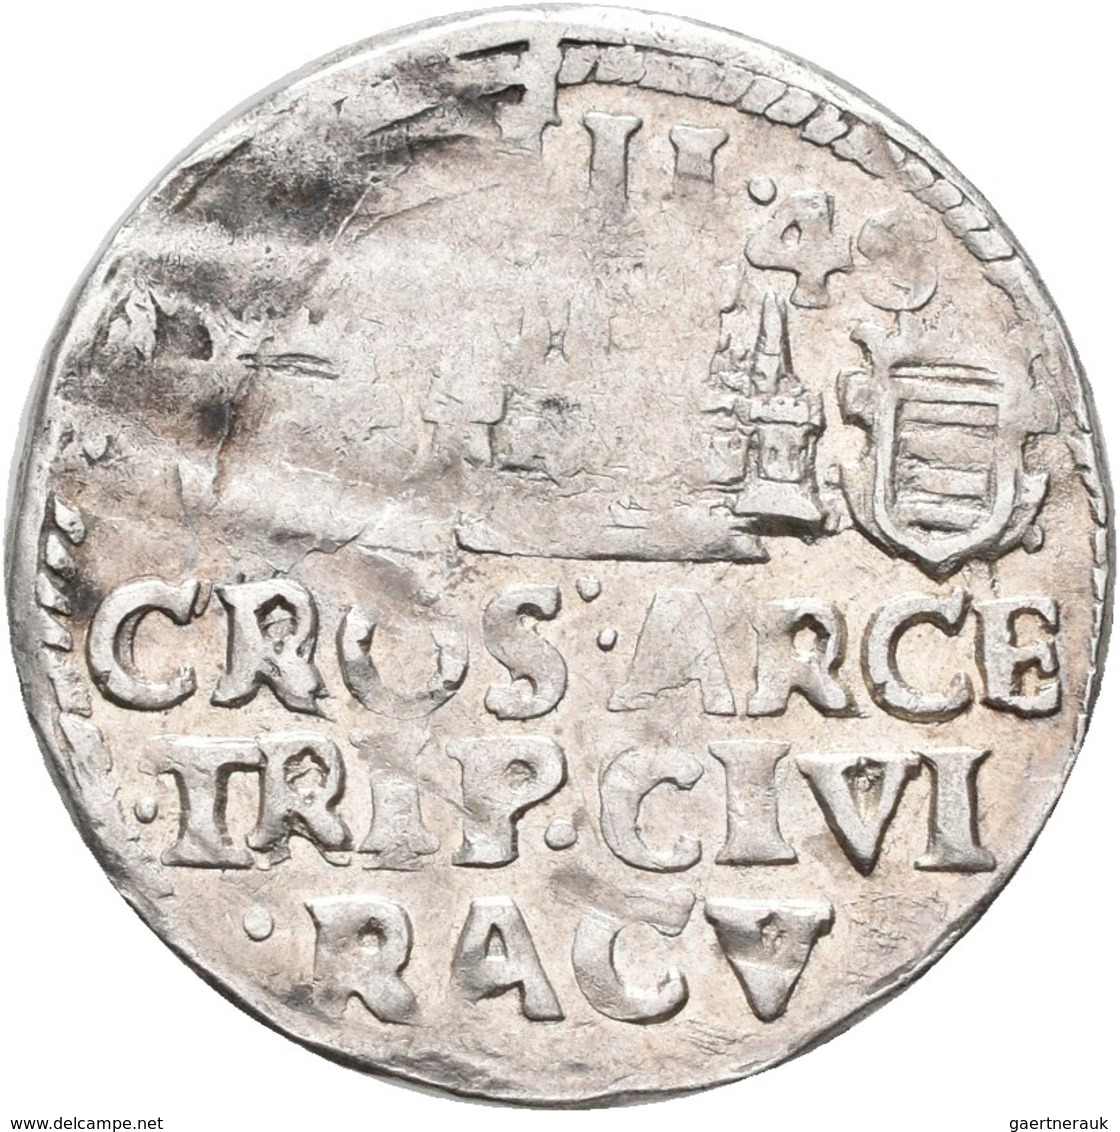 Kroatien: Republik Ragusa: 3 Gröscher (Artiluk) 1645. Brustbild Des Hl. Blasius. RACVSII ** LASIUS / - Croazia